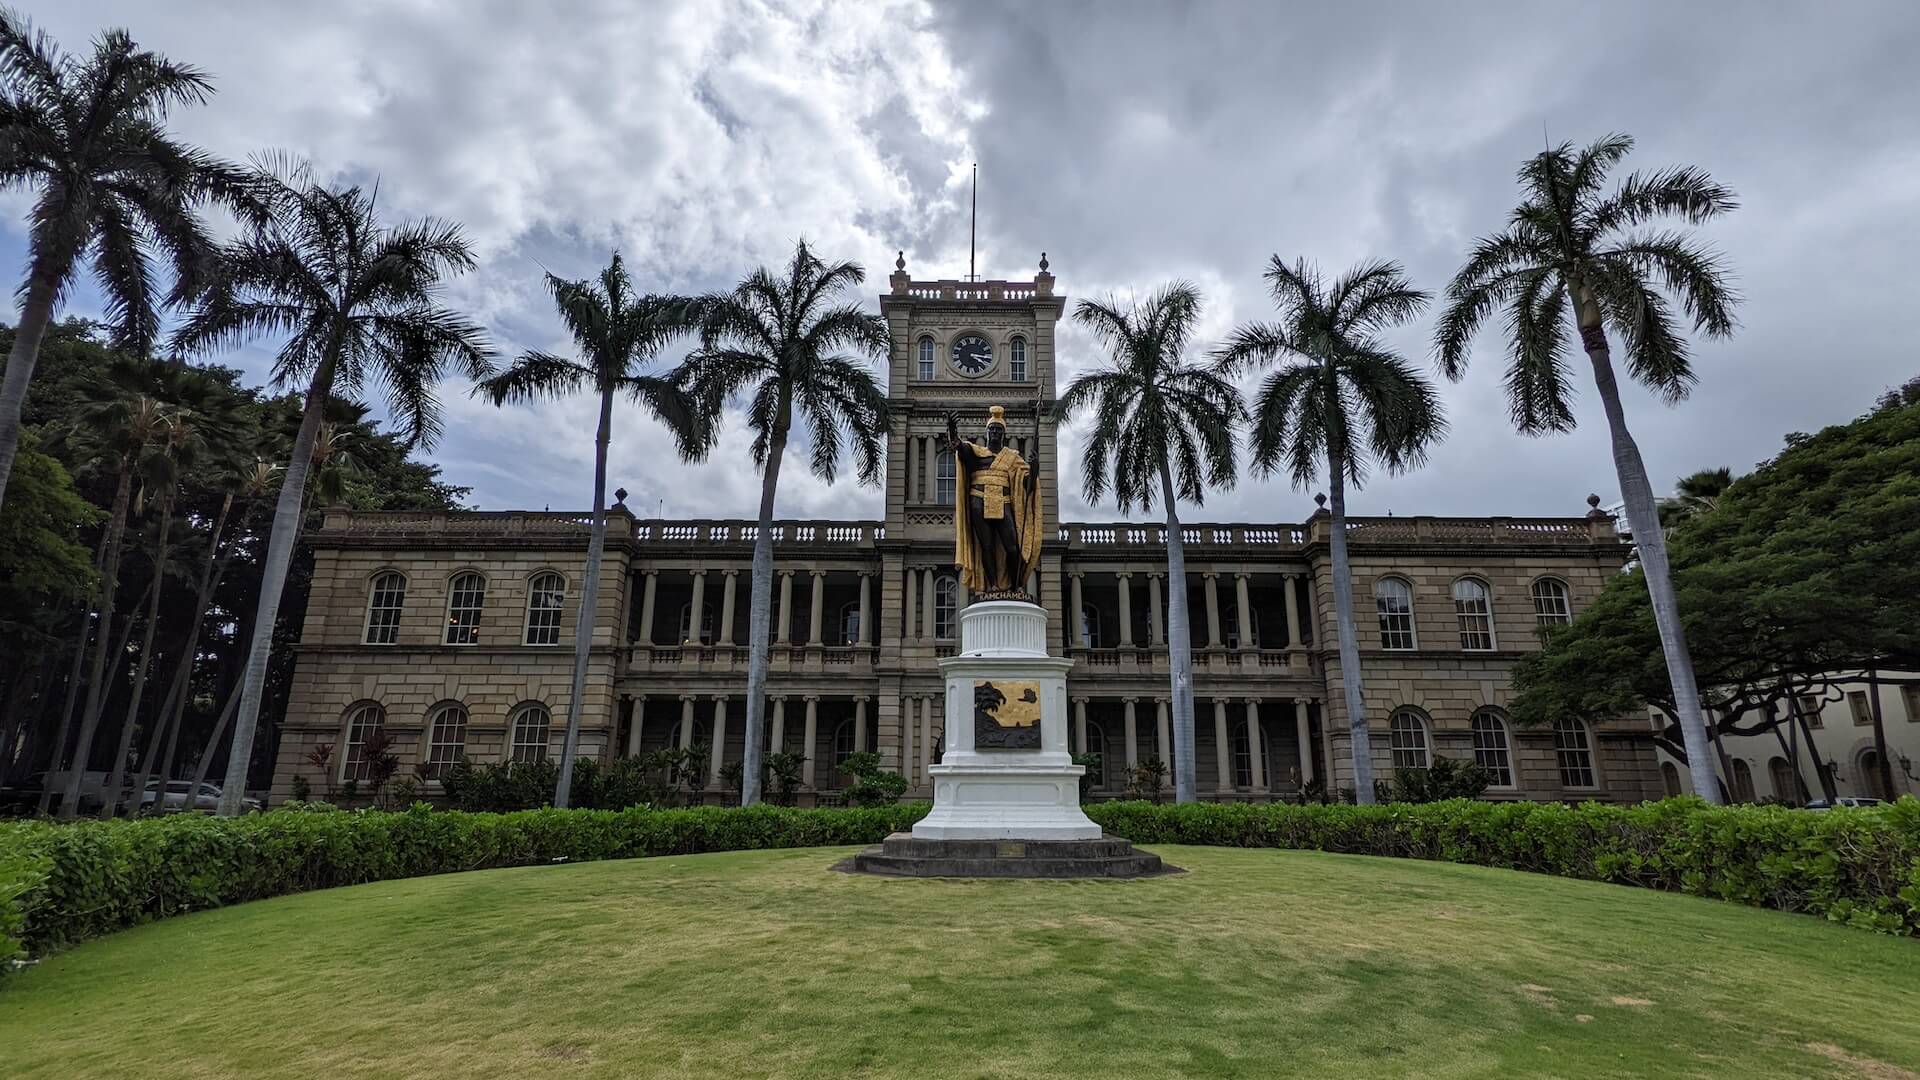 King Kamehameha Day: A Celebration of Hawaiian Heritage and Unity